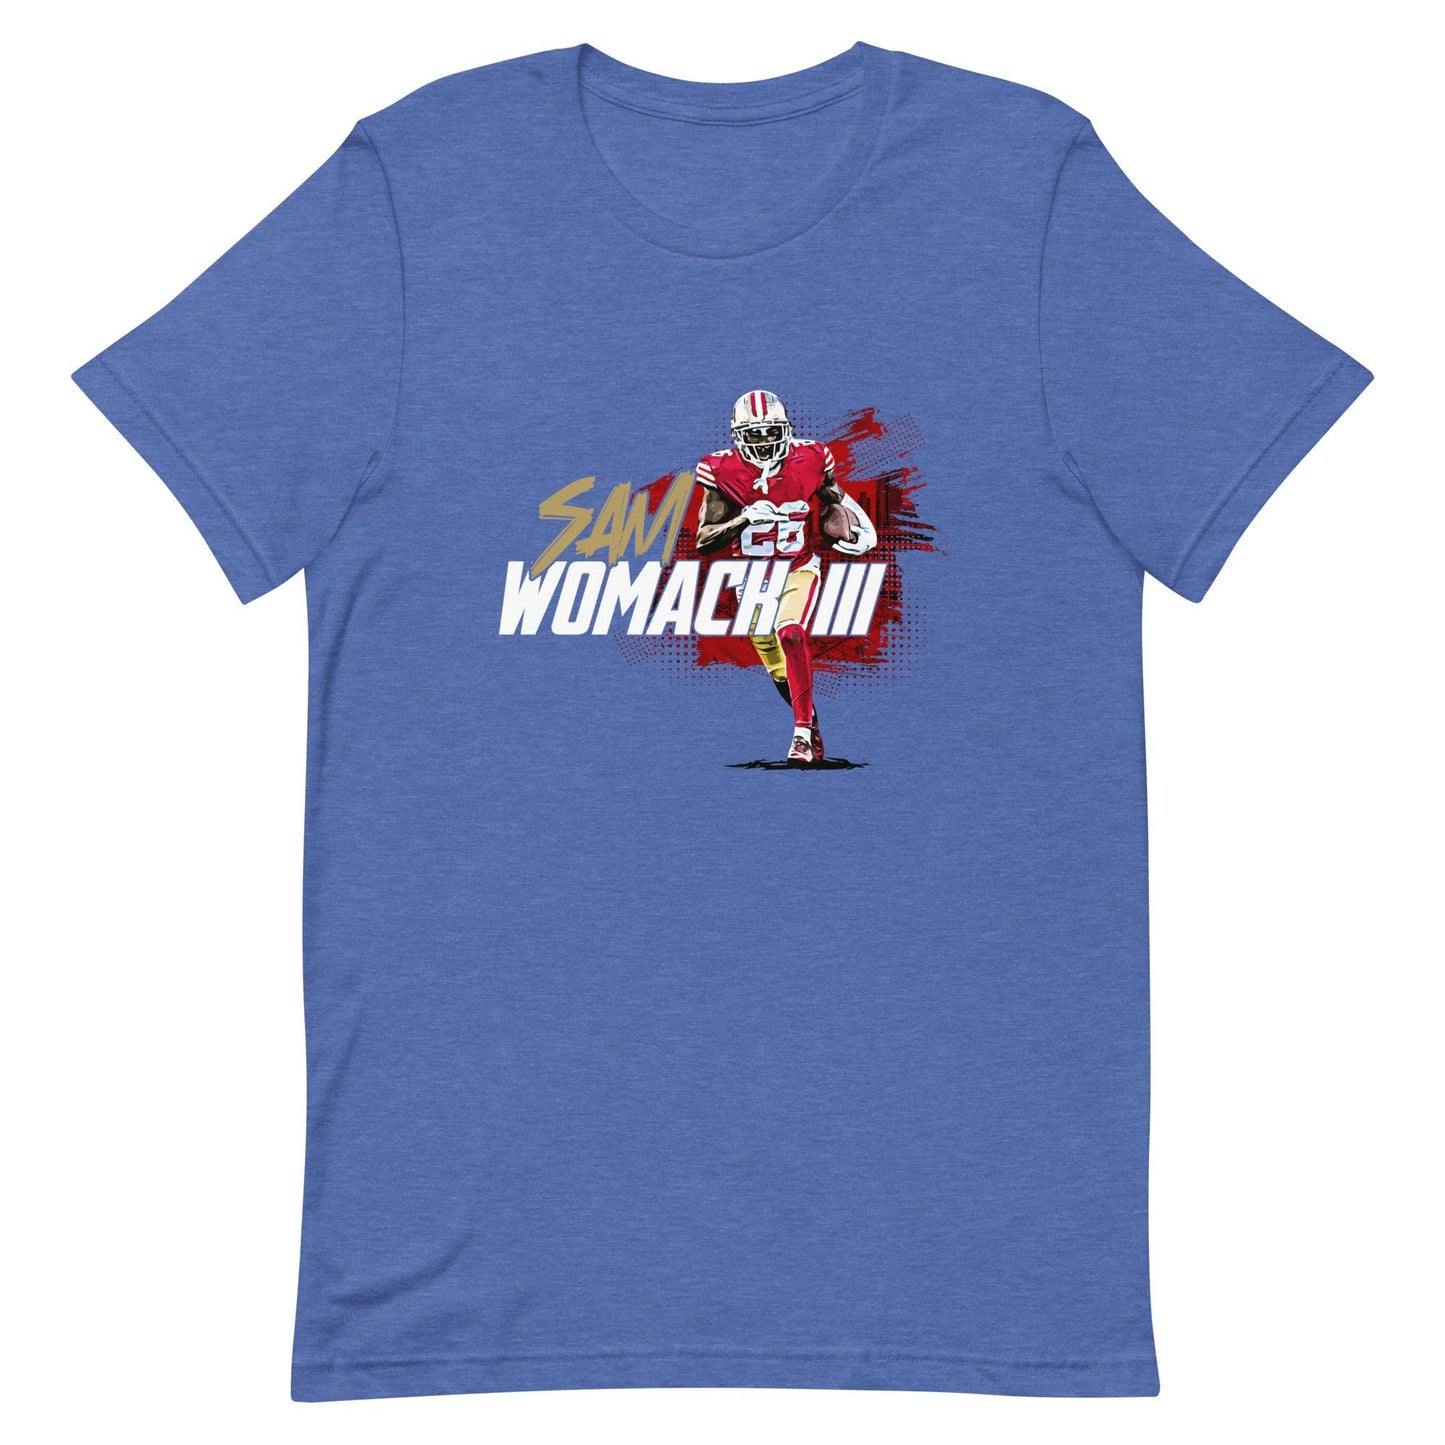 Samuel Womack "Gameday" t-shirt - Fan Arch